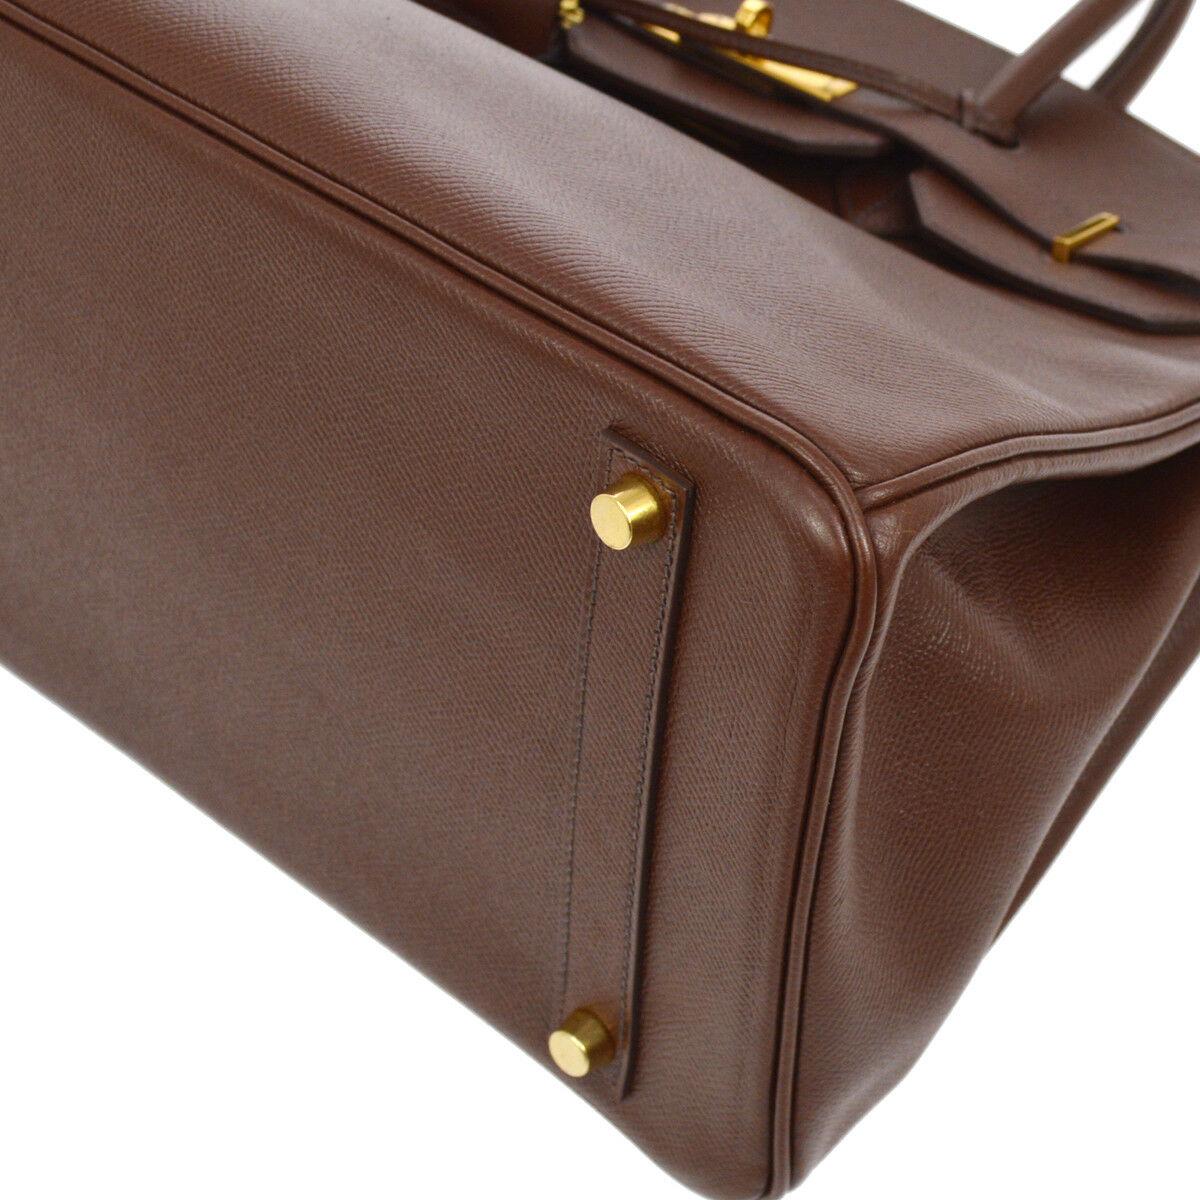 Hermes Birkin 35 Brown Leather Gold Top Carryall Handle Satchel Travel Tote Bag 2